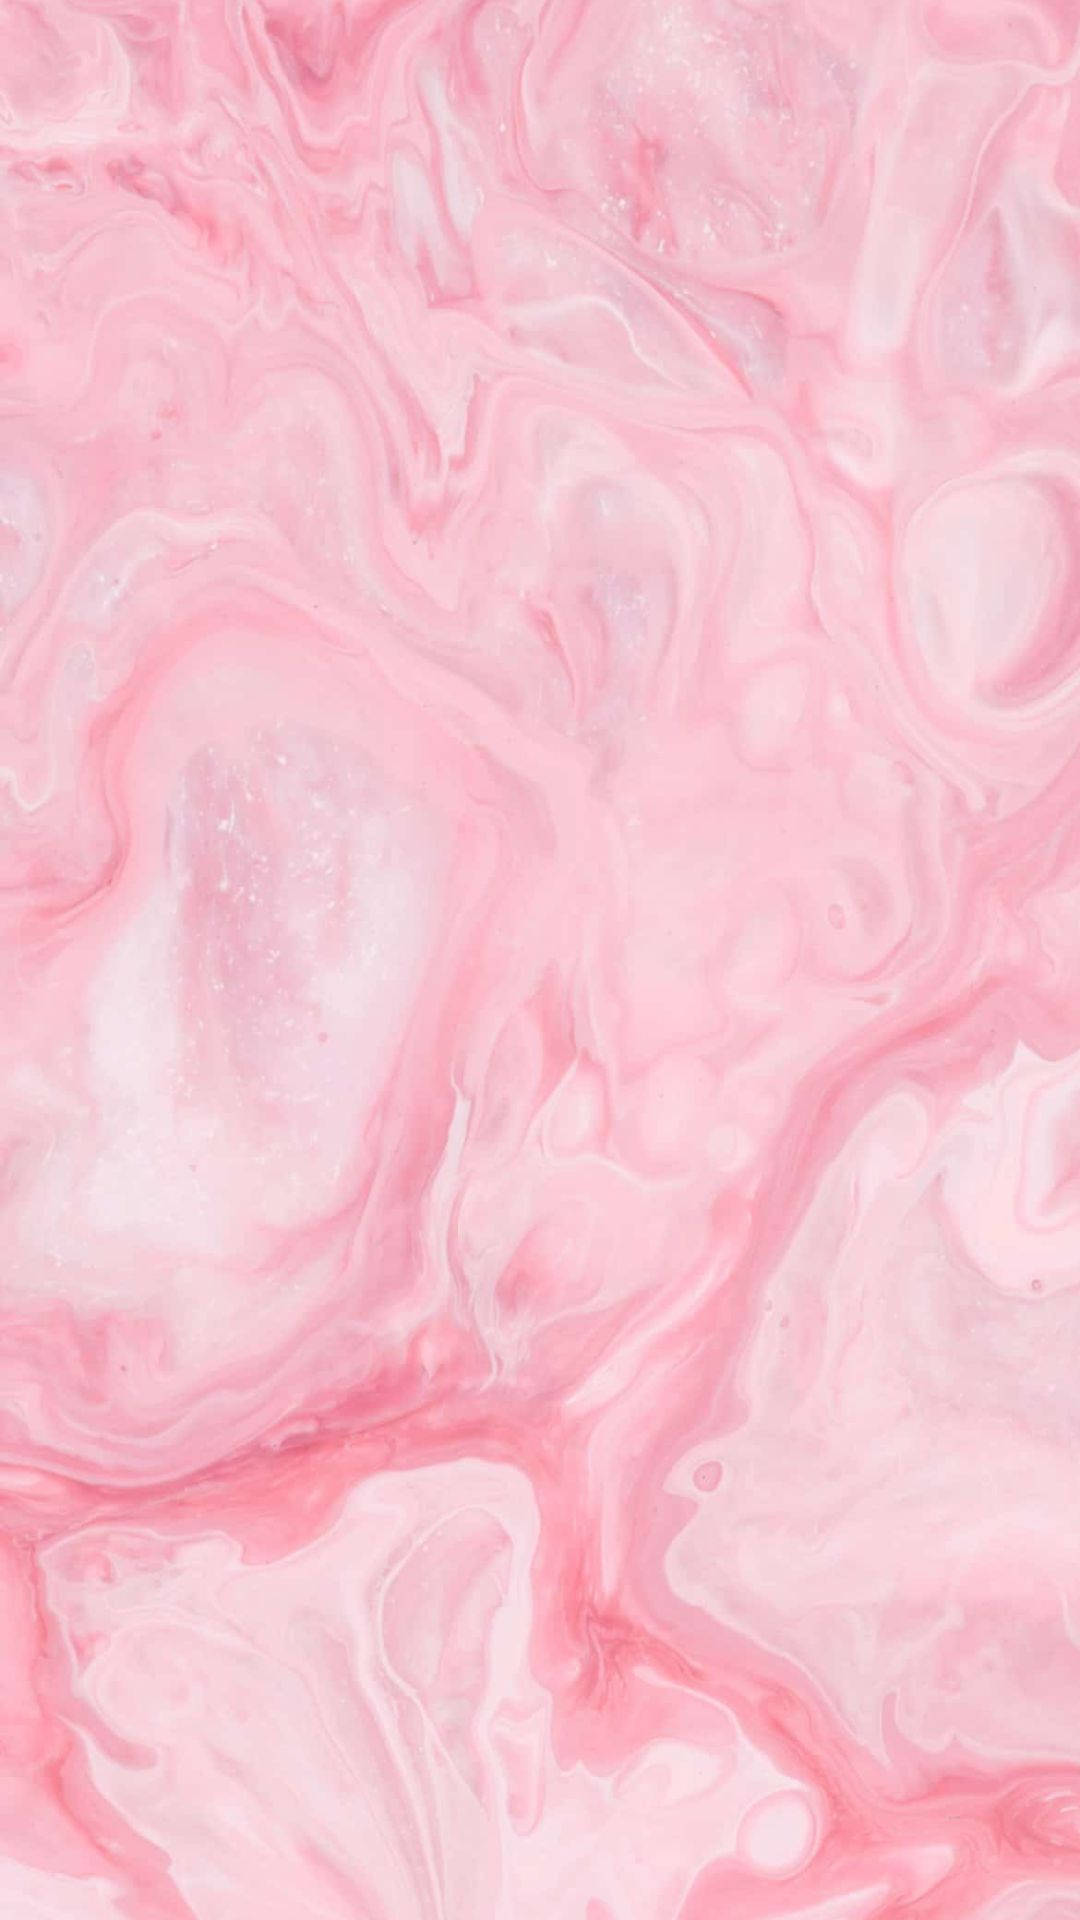 Aesthetic Pink Liquid Background